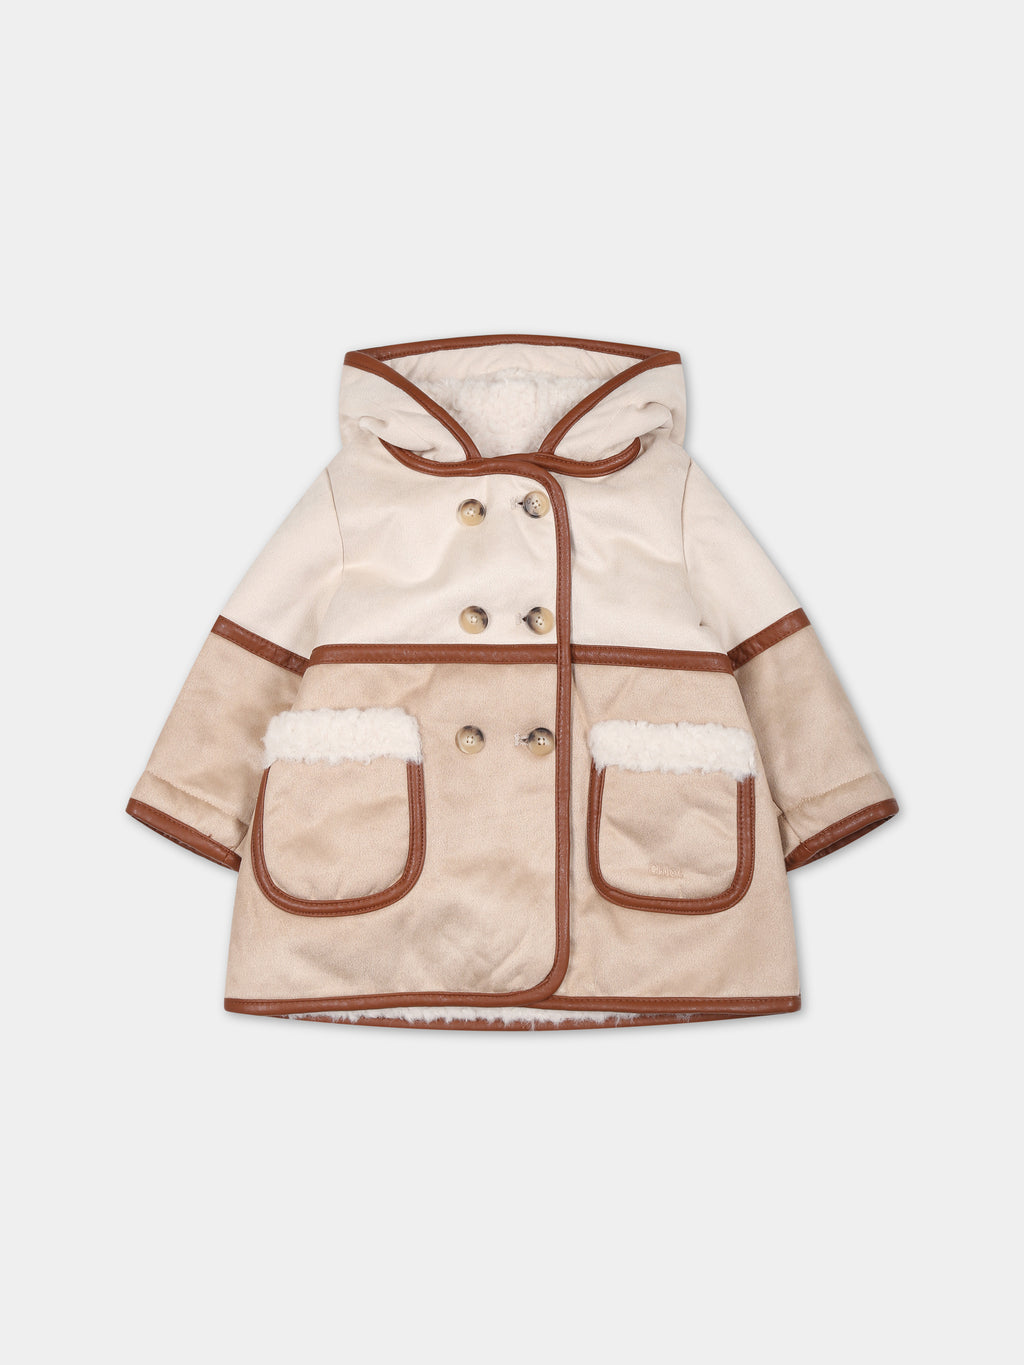 Beige coat for baby girl with logo